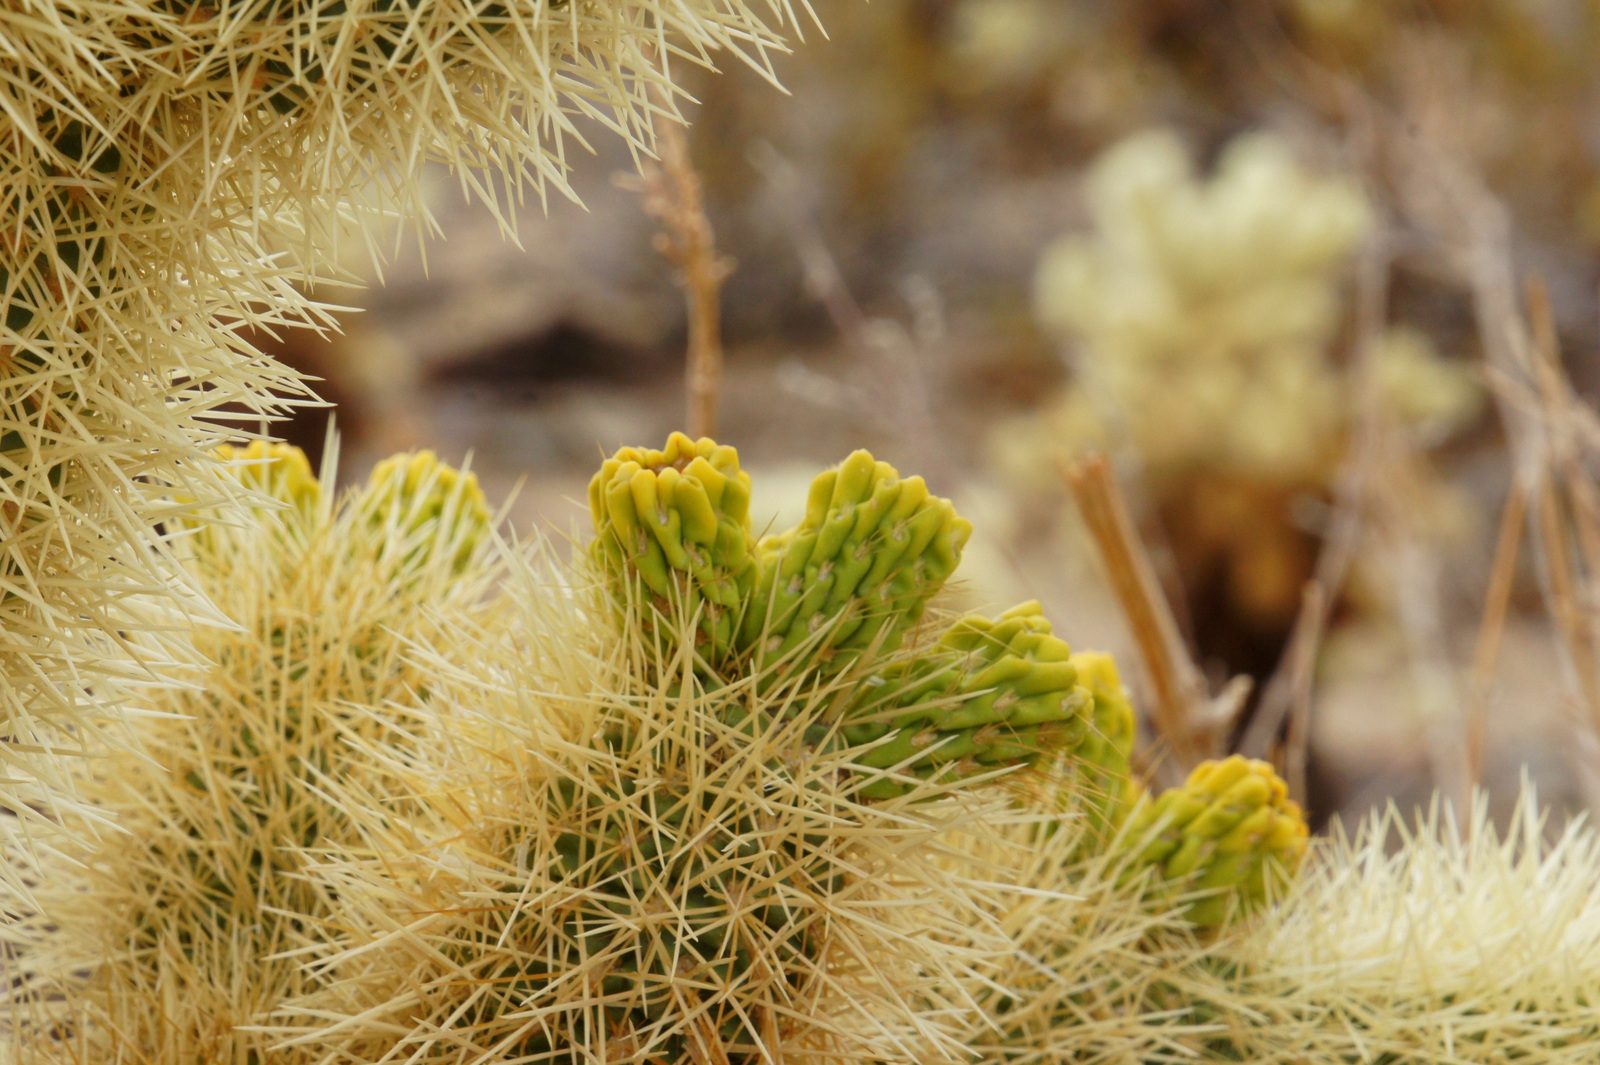 Cholla cacti buds after a rain storm.